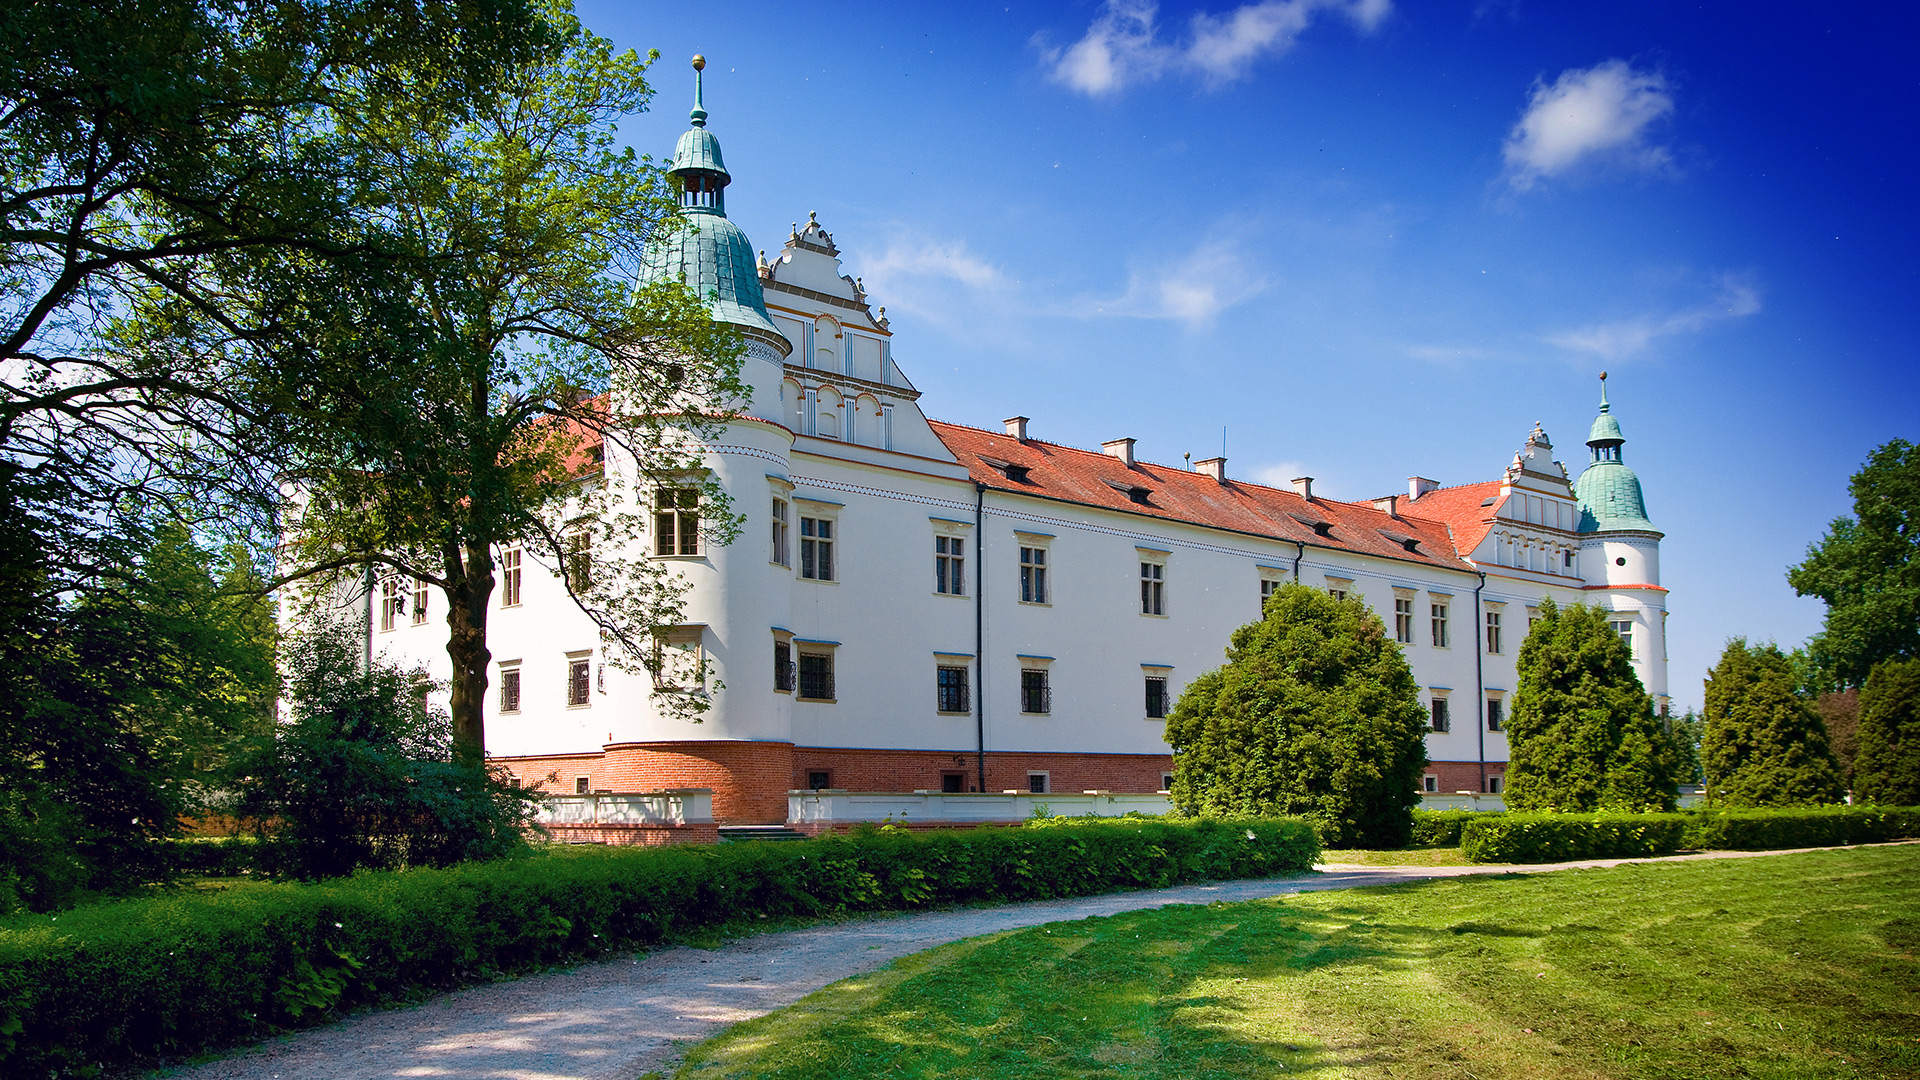 HQ Baranów Sandomierski Castle Wallpapers | File 1194.4Kb